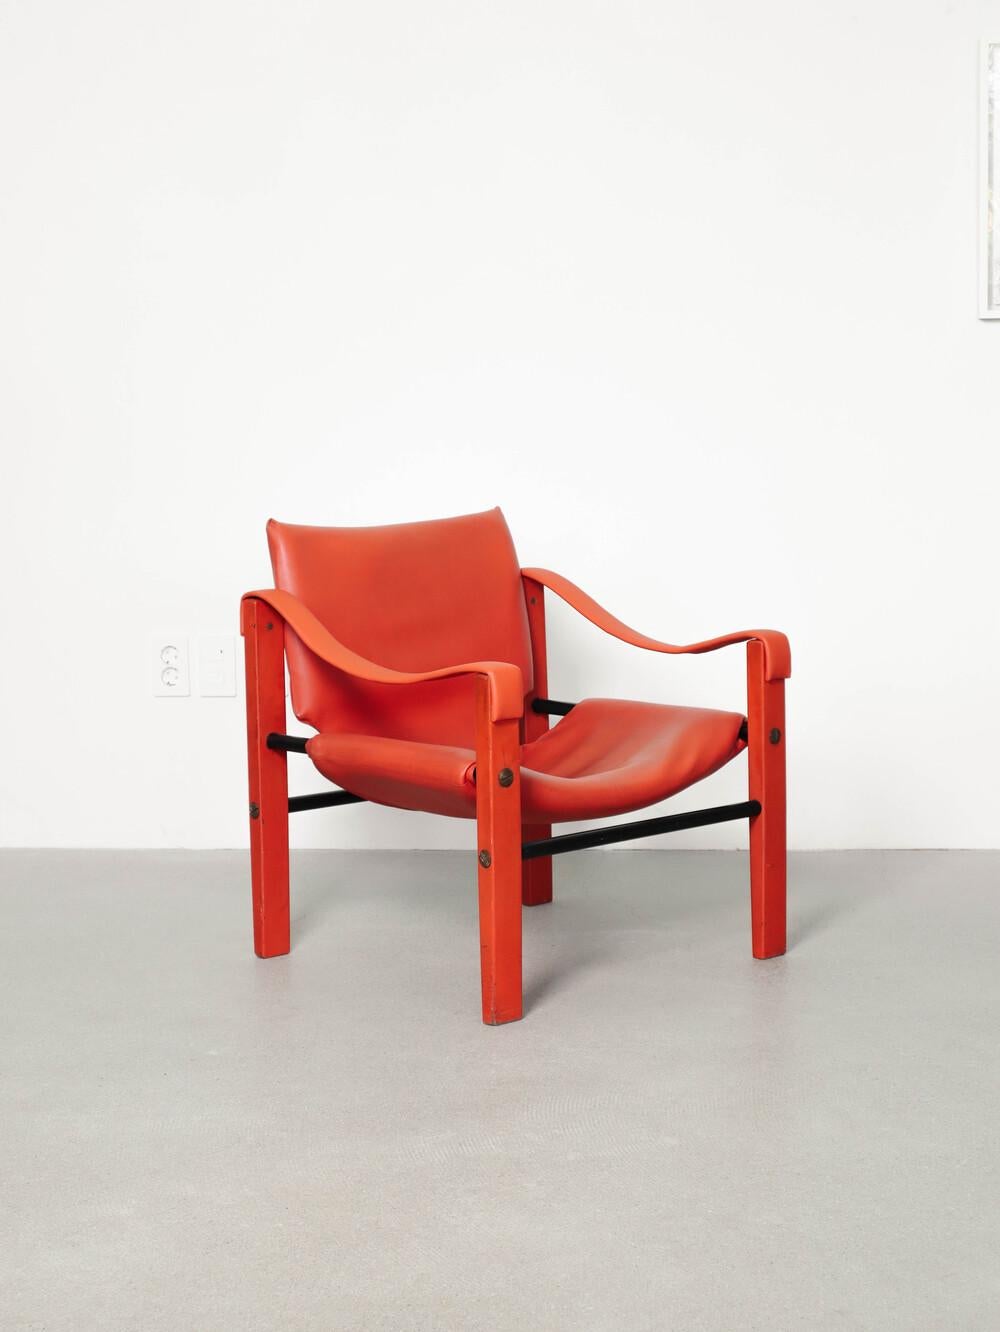 Beautiful vibrant red Safari arm chair by Maurice Burke for Arkana.  